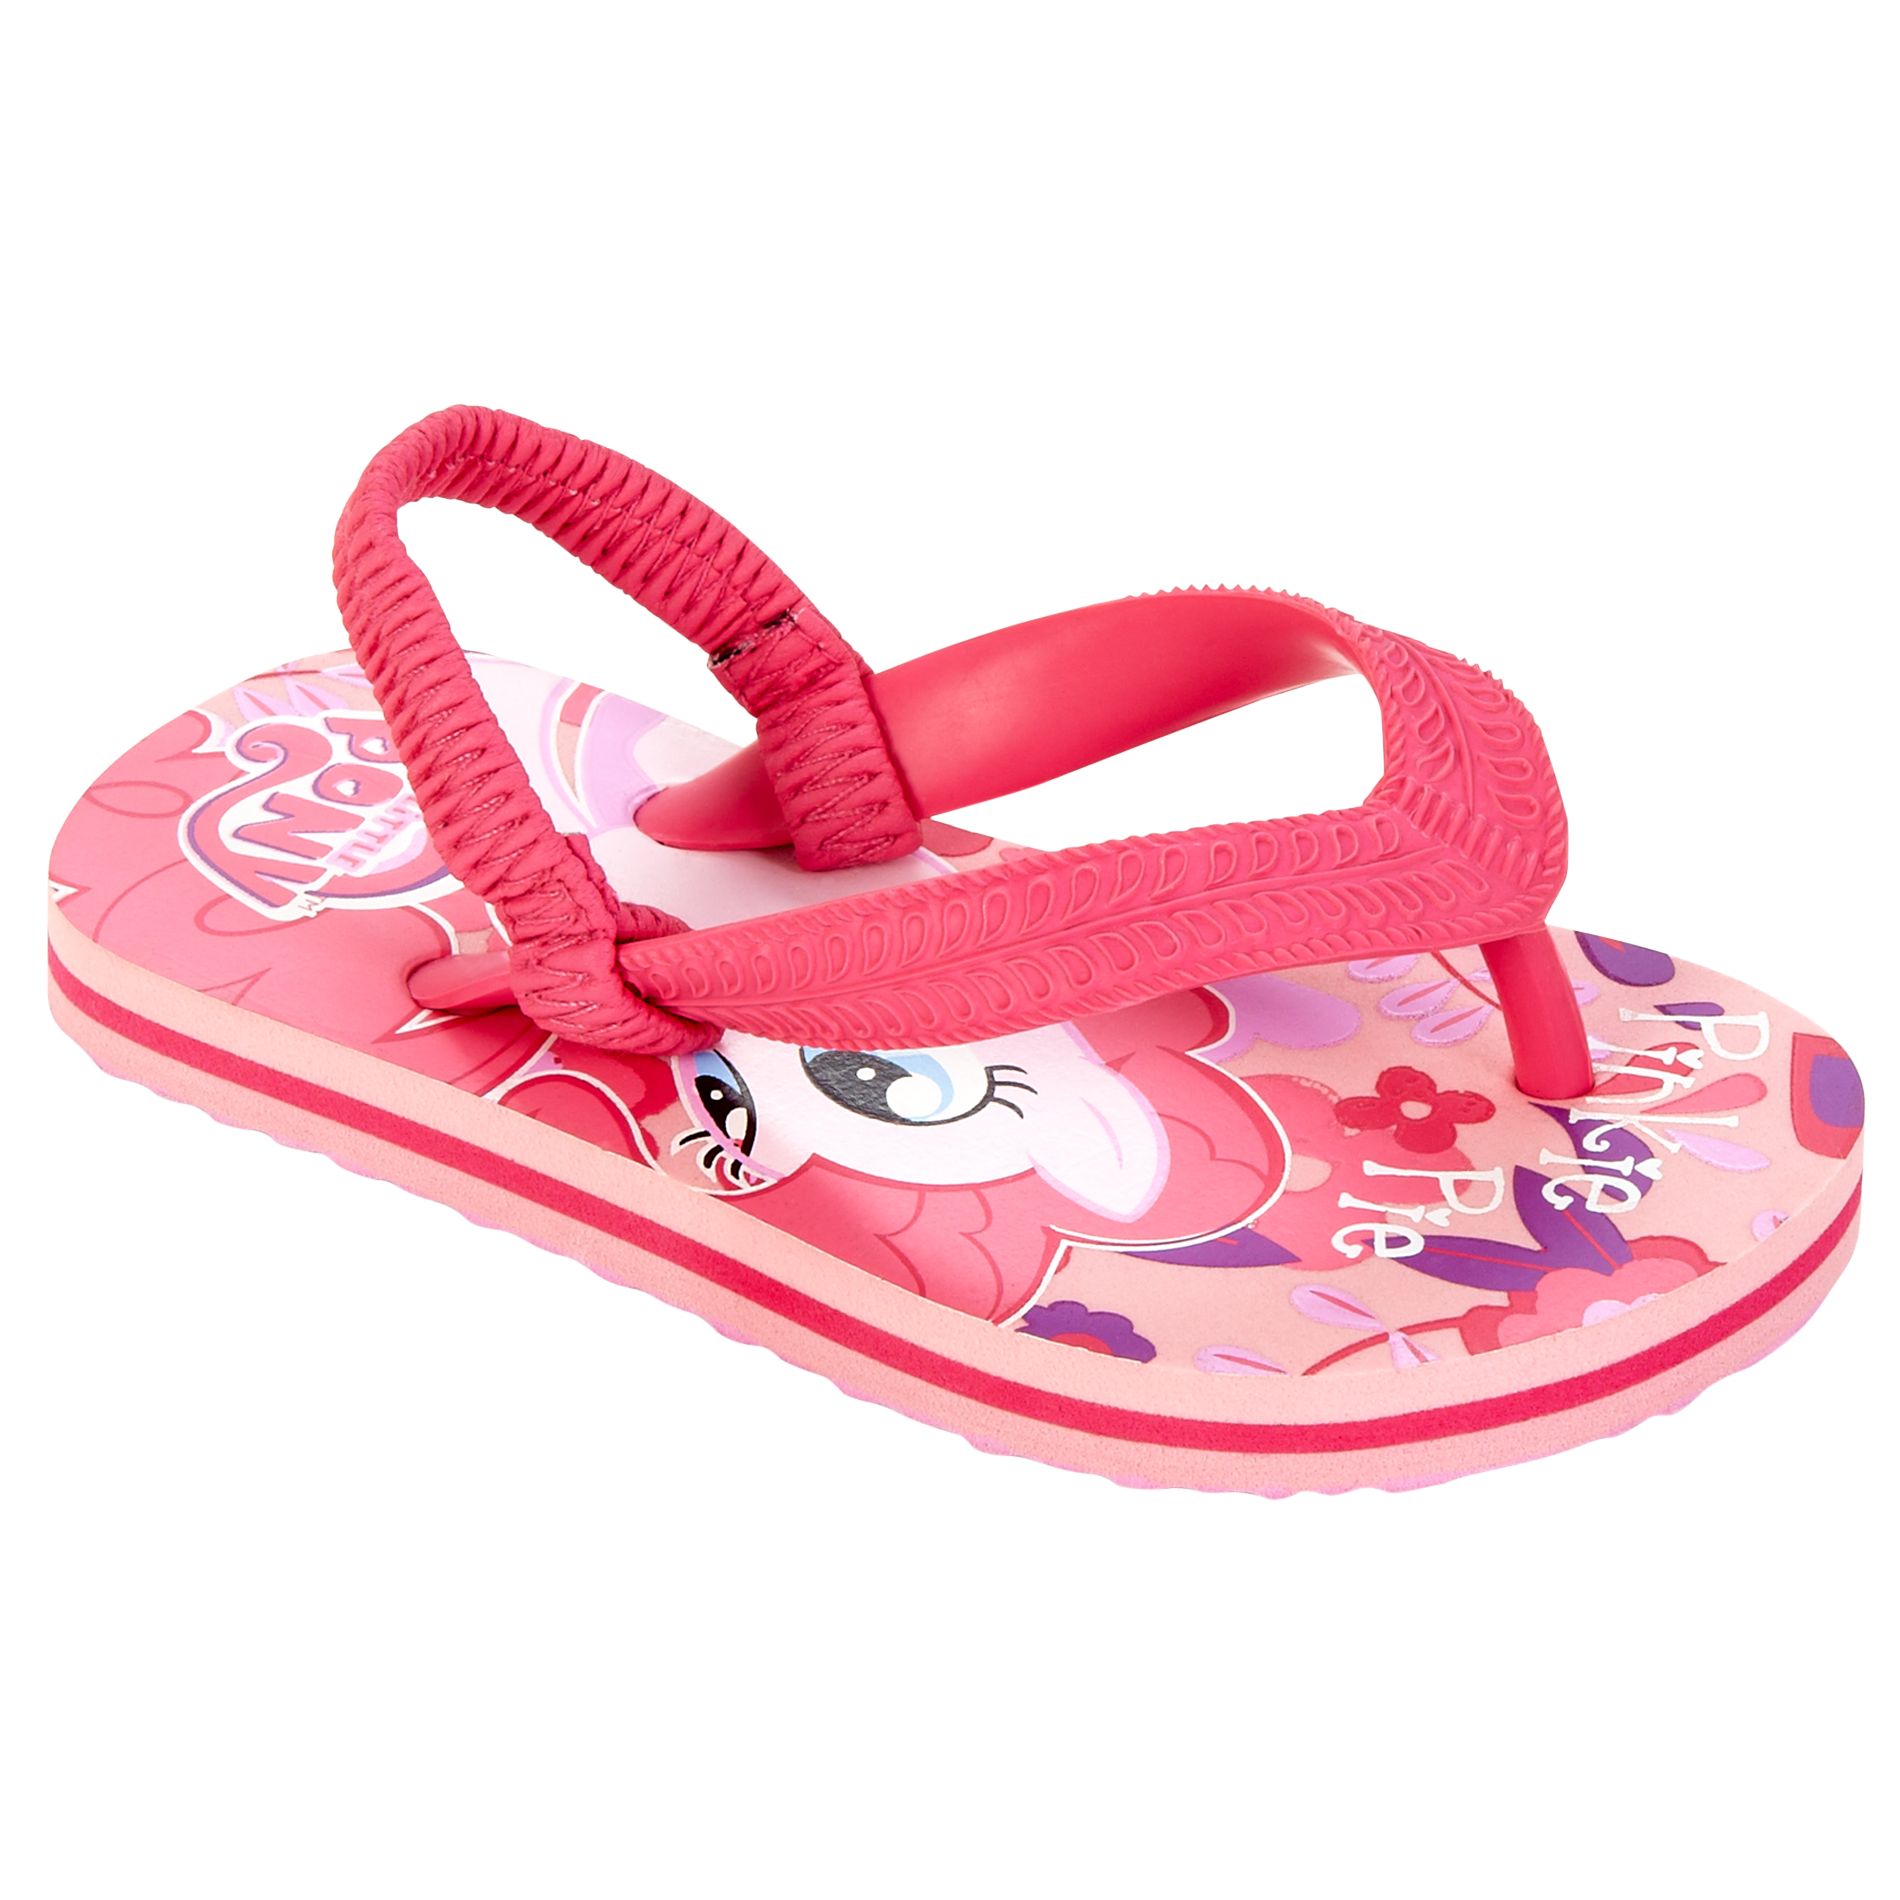 Hasbro Toddler Girl's My Lil Pony Sandal - Pink